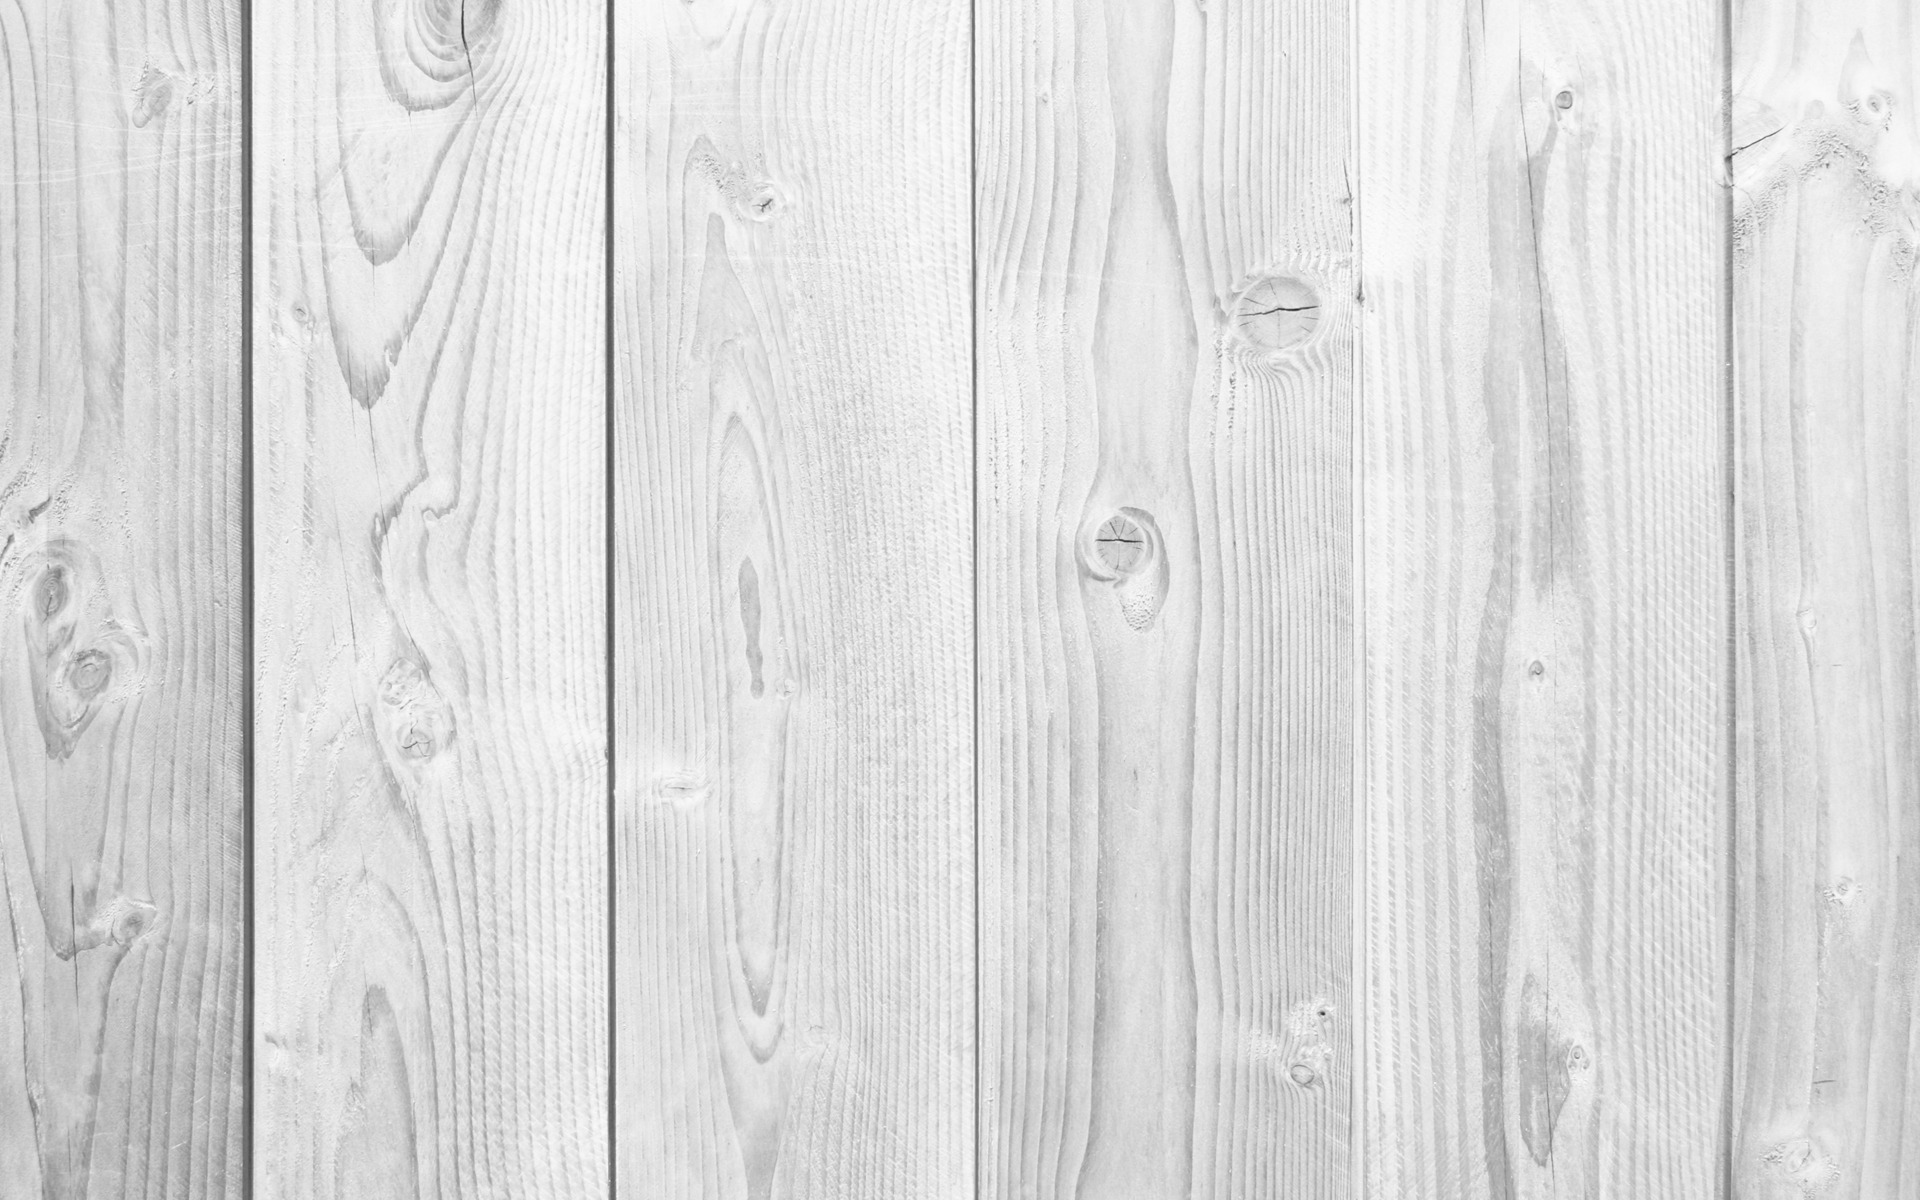  comwp contentuploads201308white wood wall texture wallpaperjpg